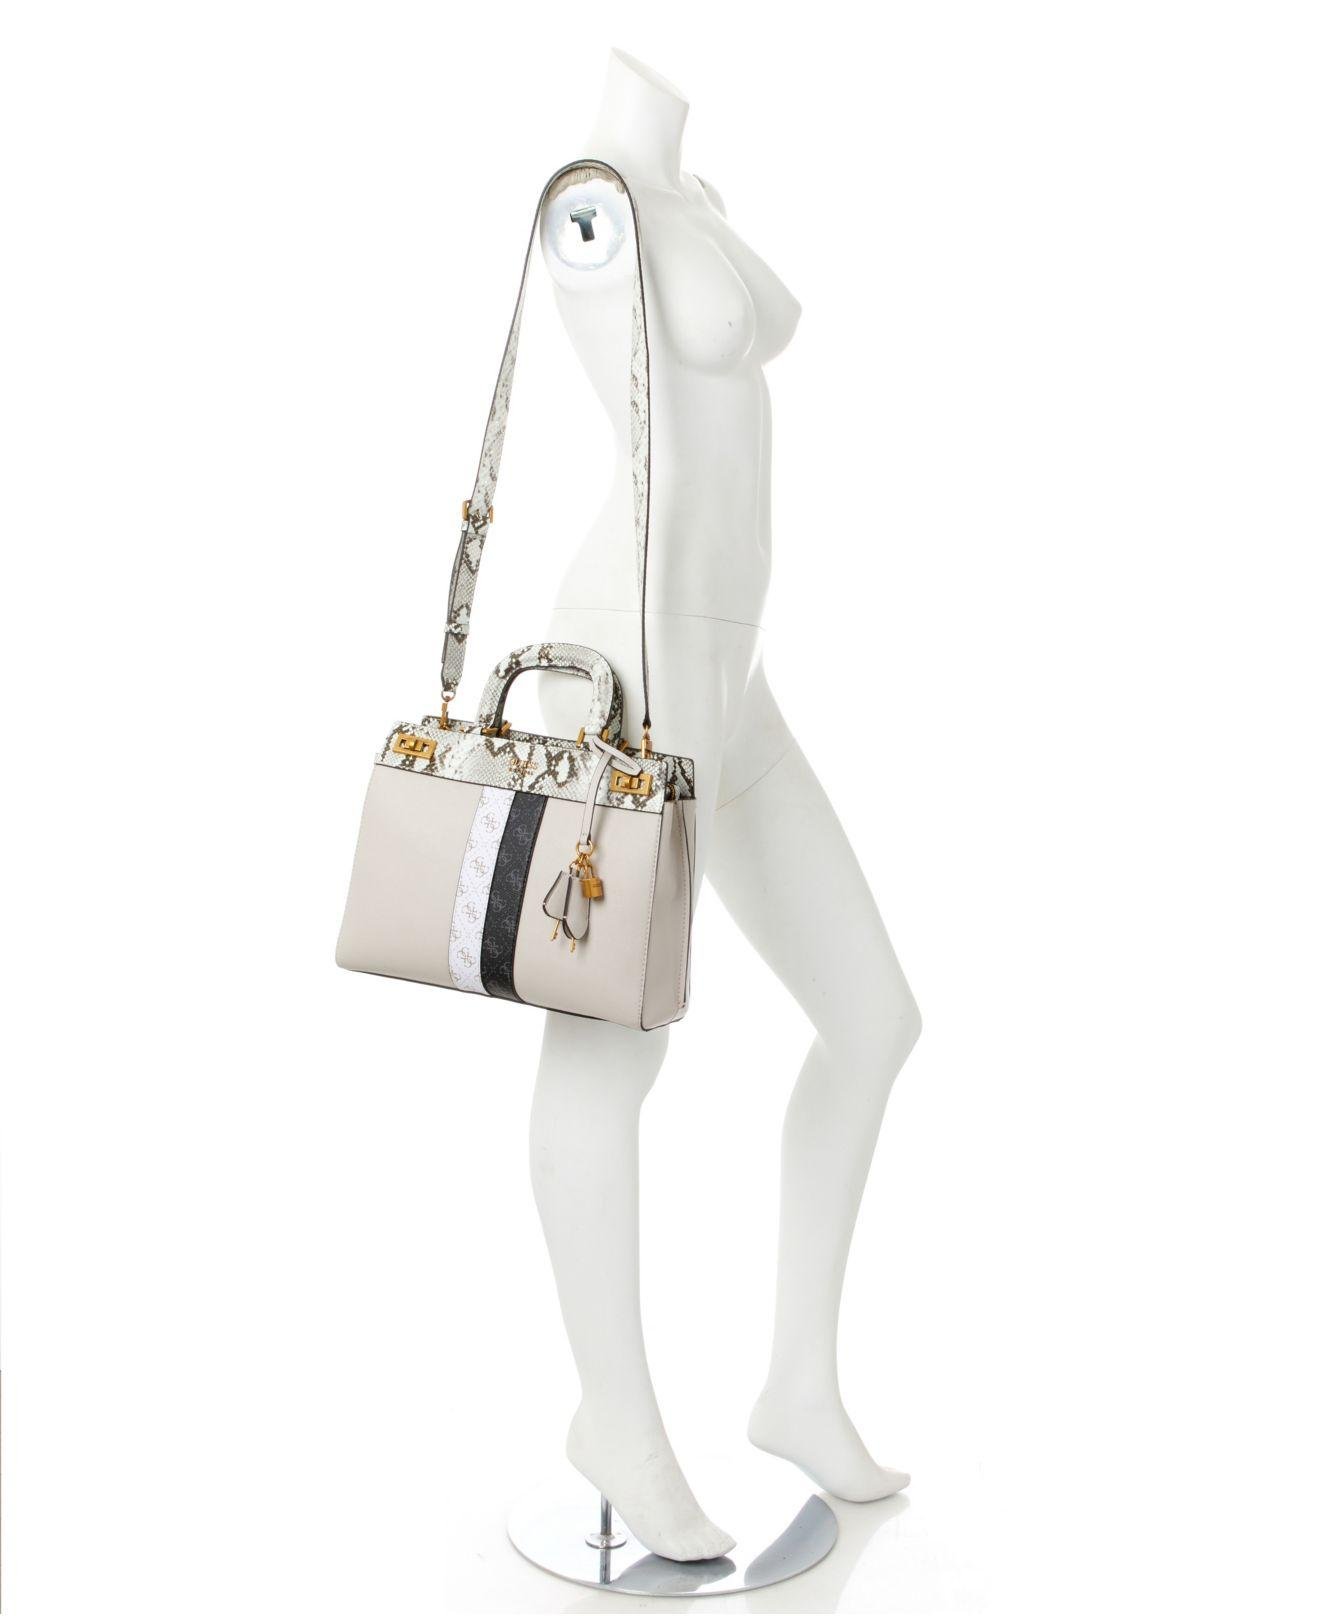 GUESS Katey Luxury Satchel Faux Leather Handbag OS